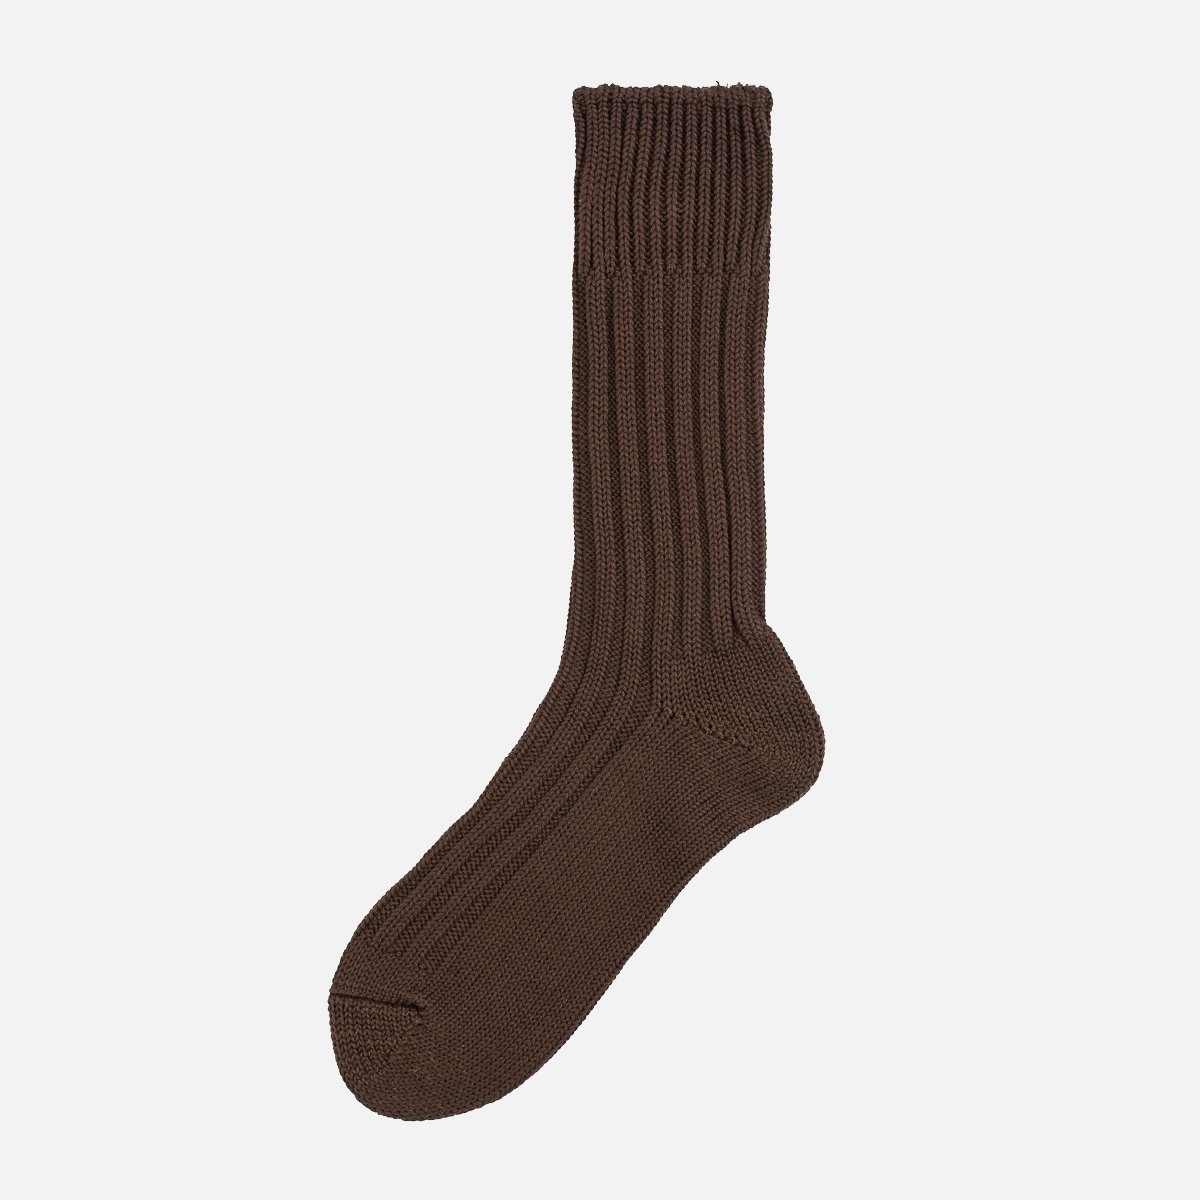 DEC-CAS-BRN Decka Cased Heavyweight Plain Socks - Brown - 3